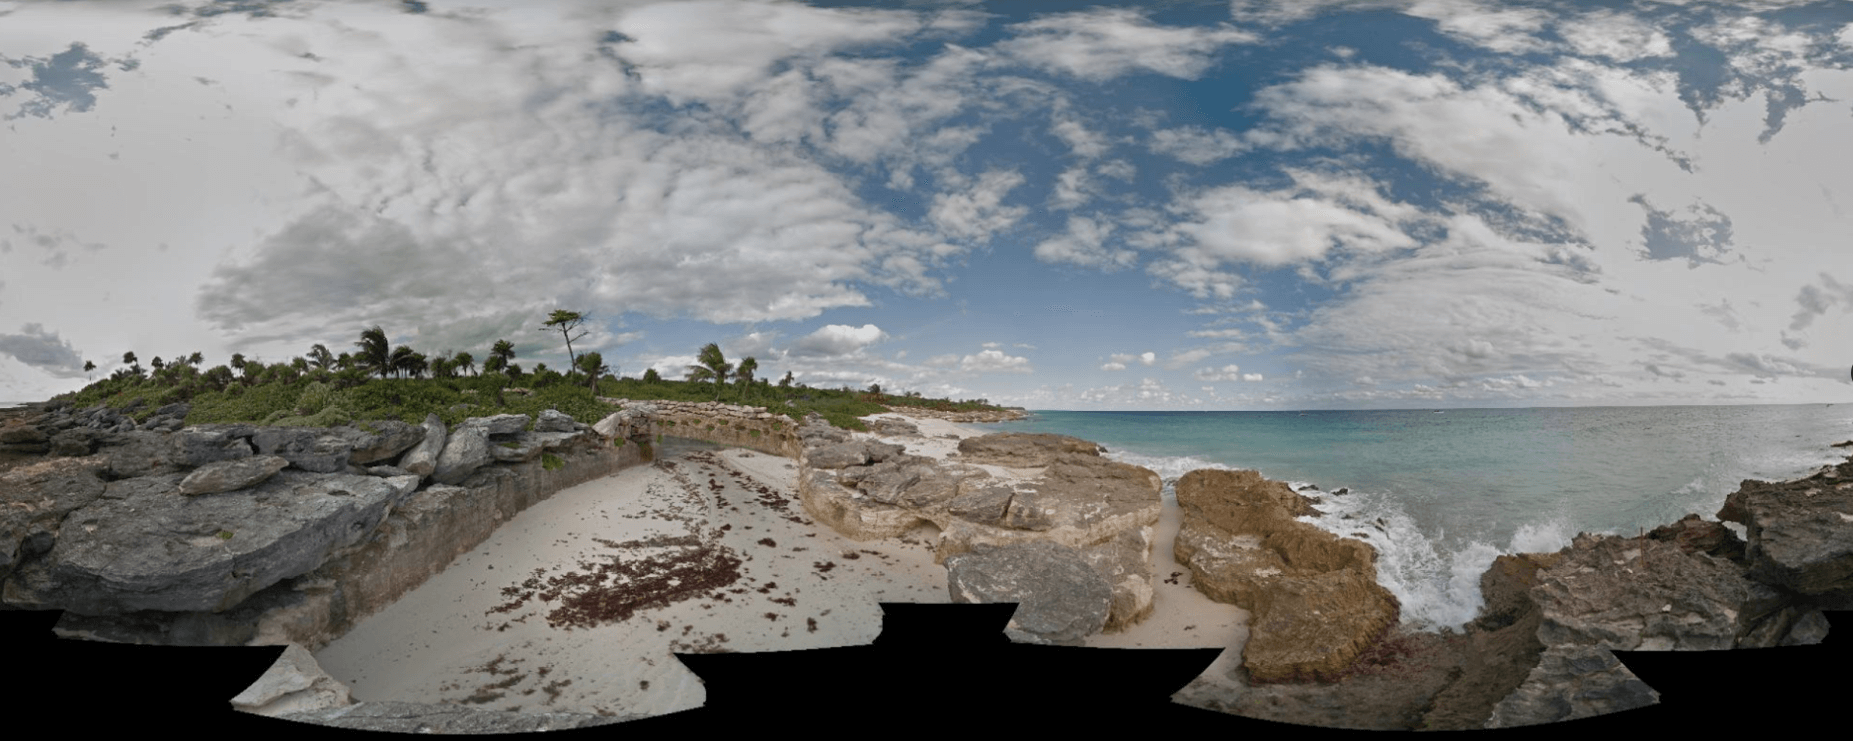 Cancún, Quintana Roo. Imagen original de Google Street View